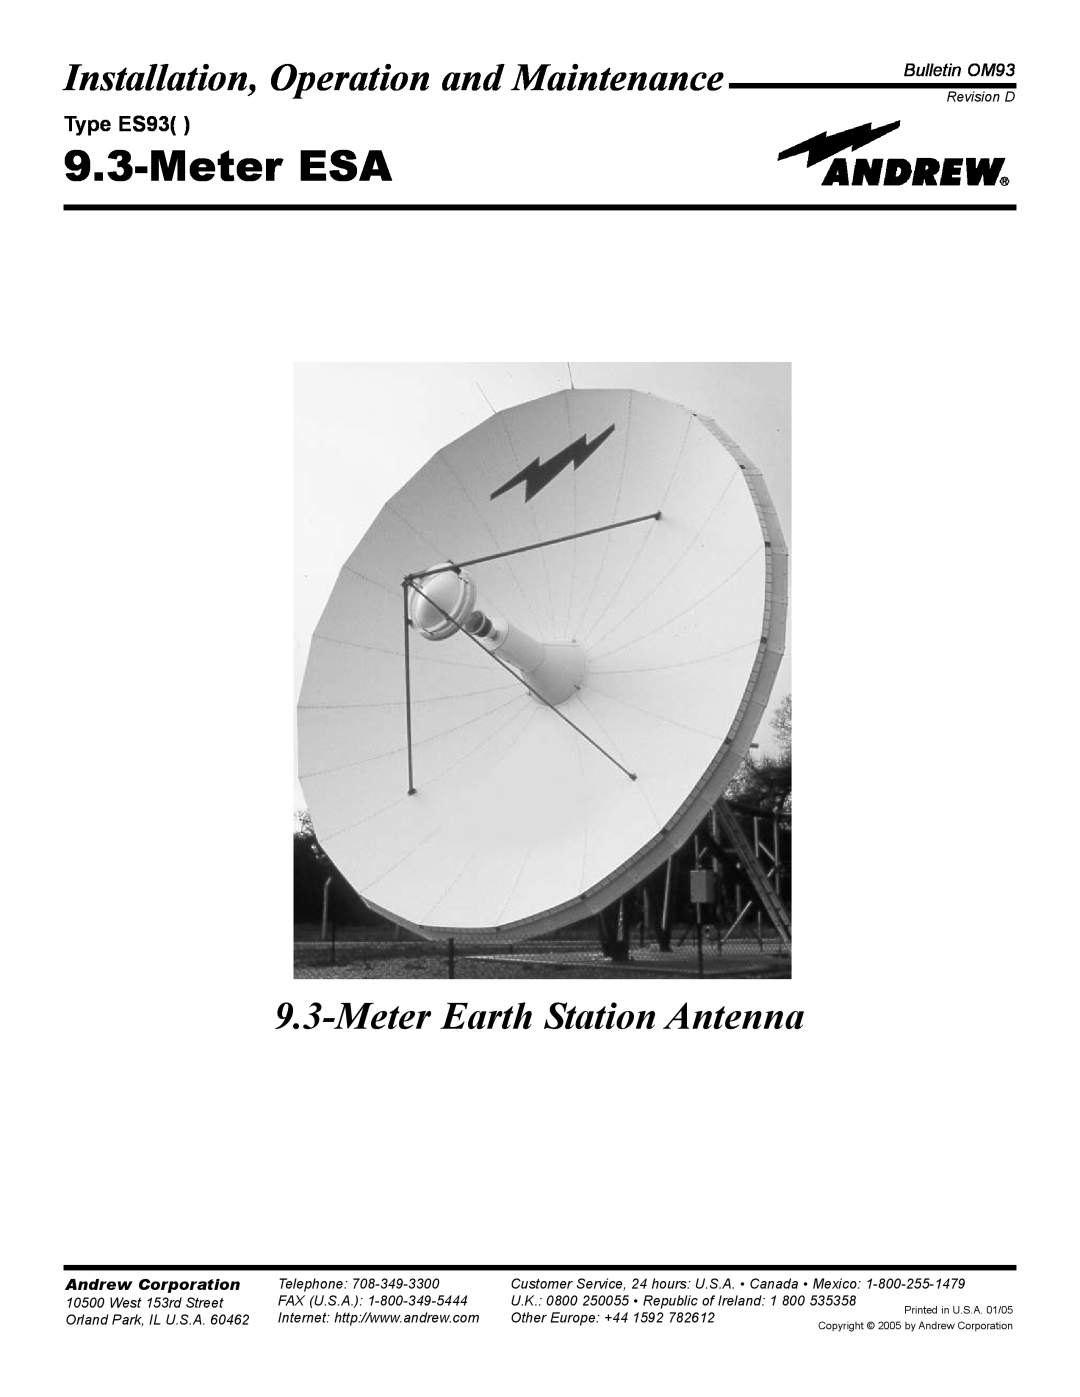 Andrew 9.3-Meter ESA manual Type ES93, MeterESA, Installation, Operation and Maintenance, MeterEarth Station Antenna 